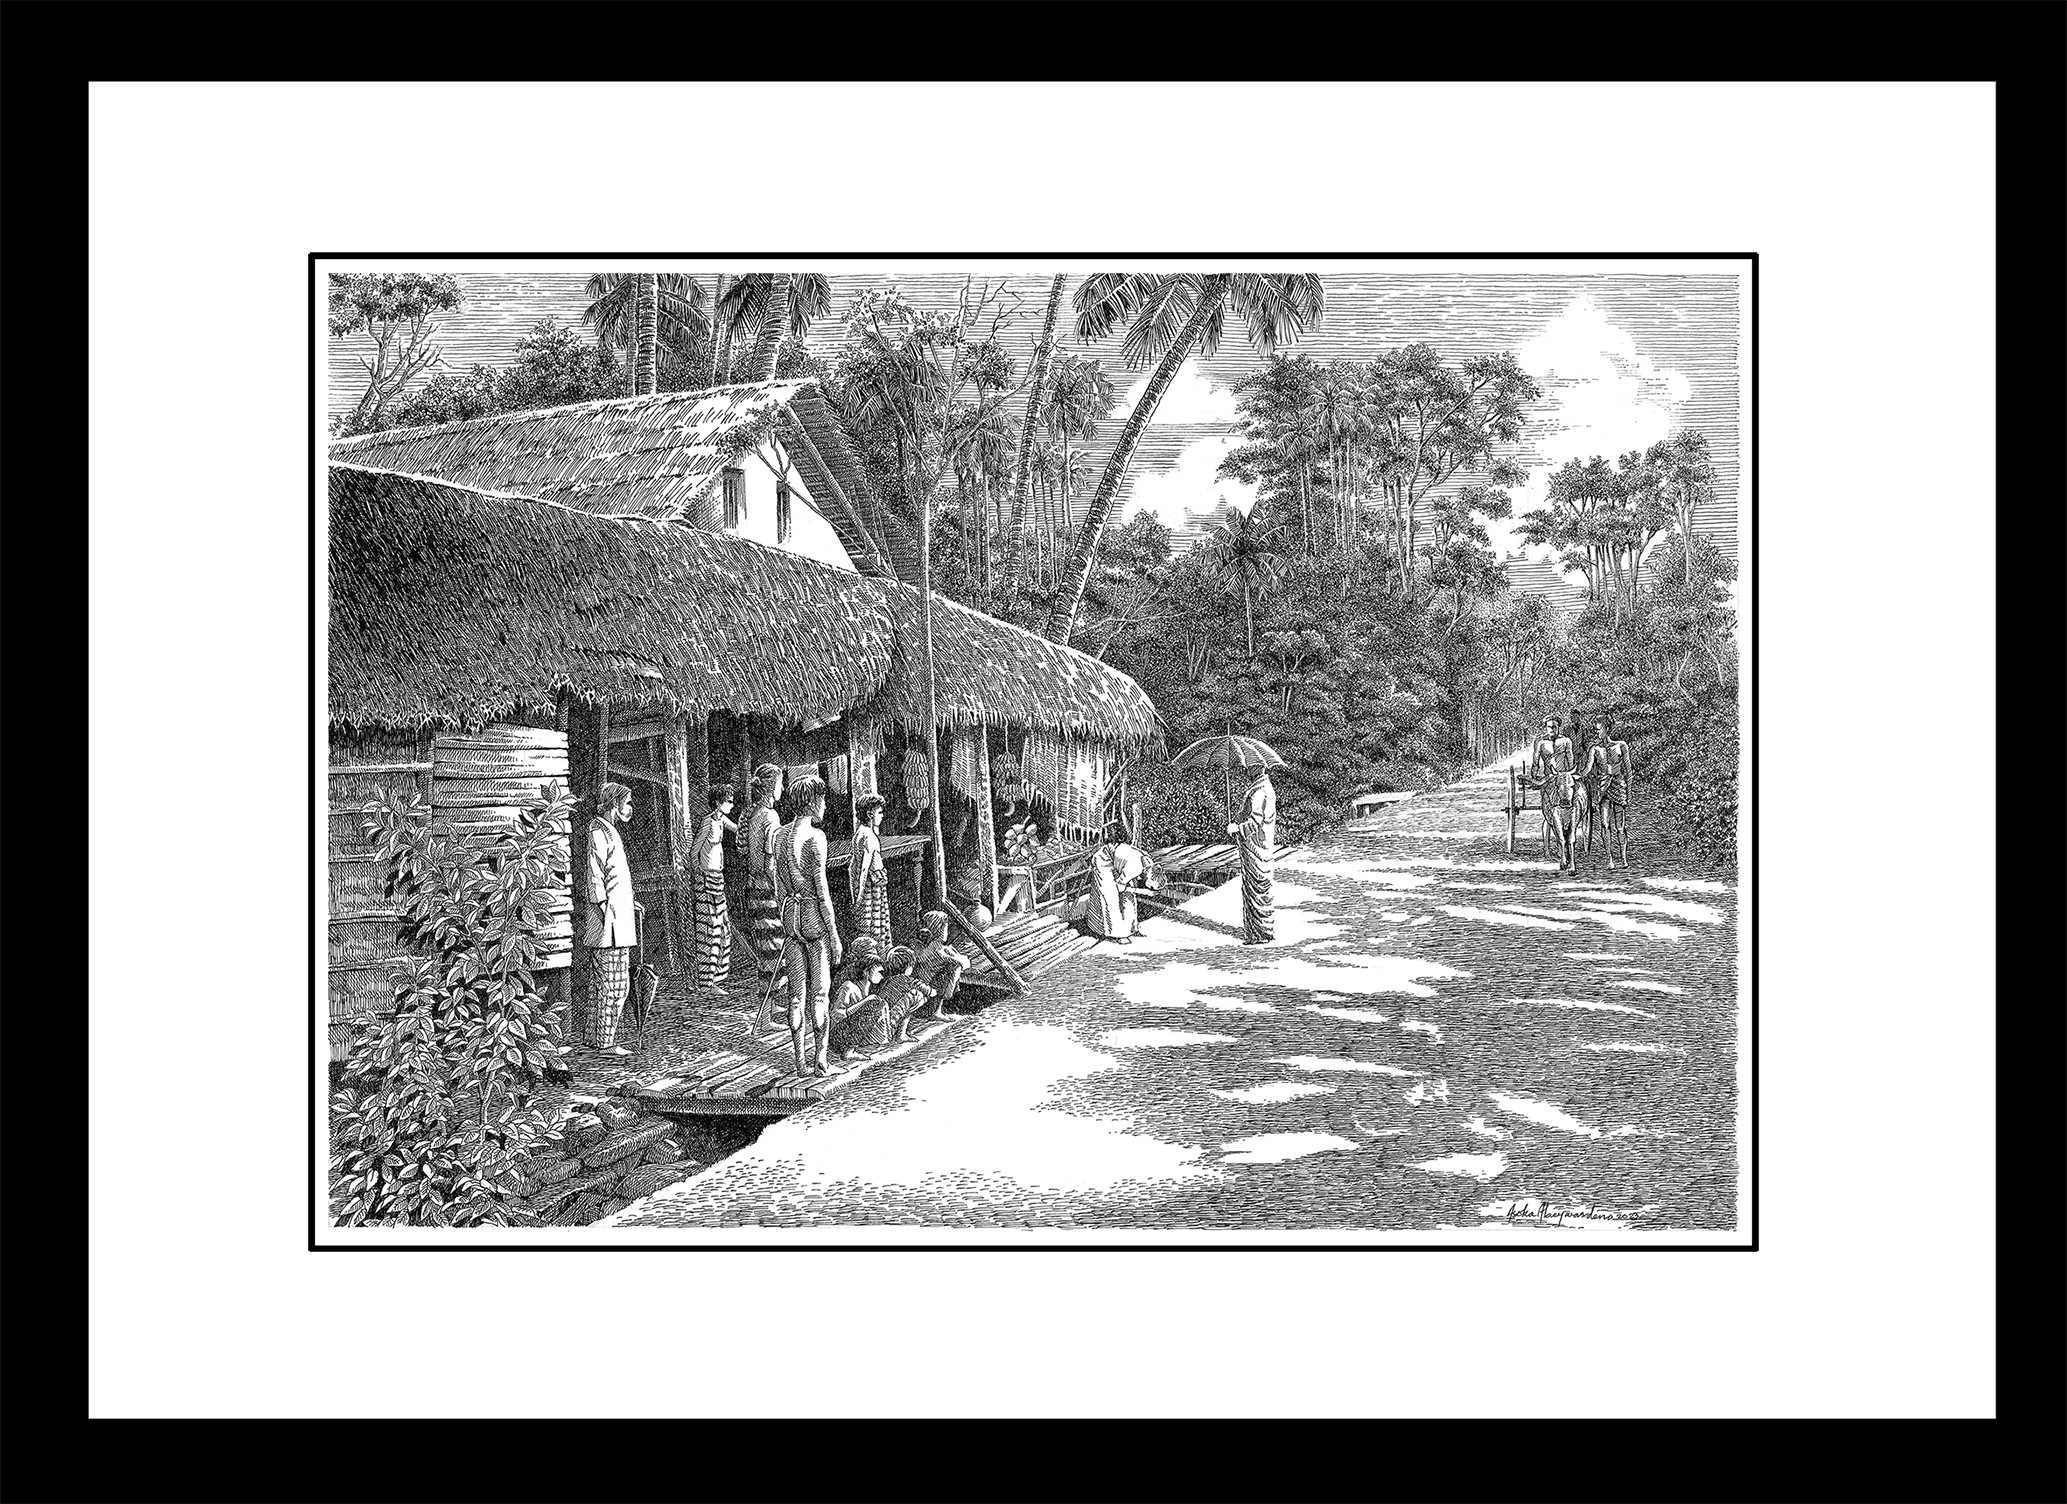 Villege scene in early Ceylon by ASOKA ABEYWARDENA